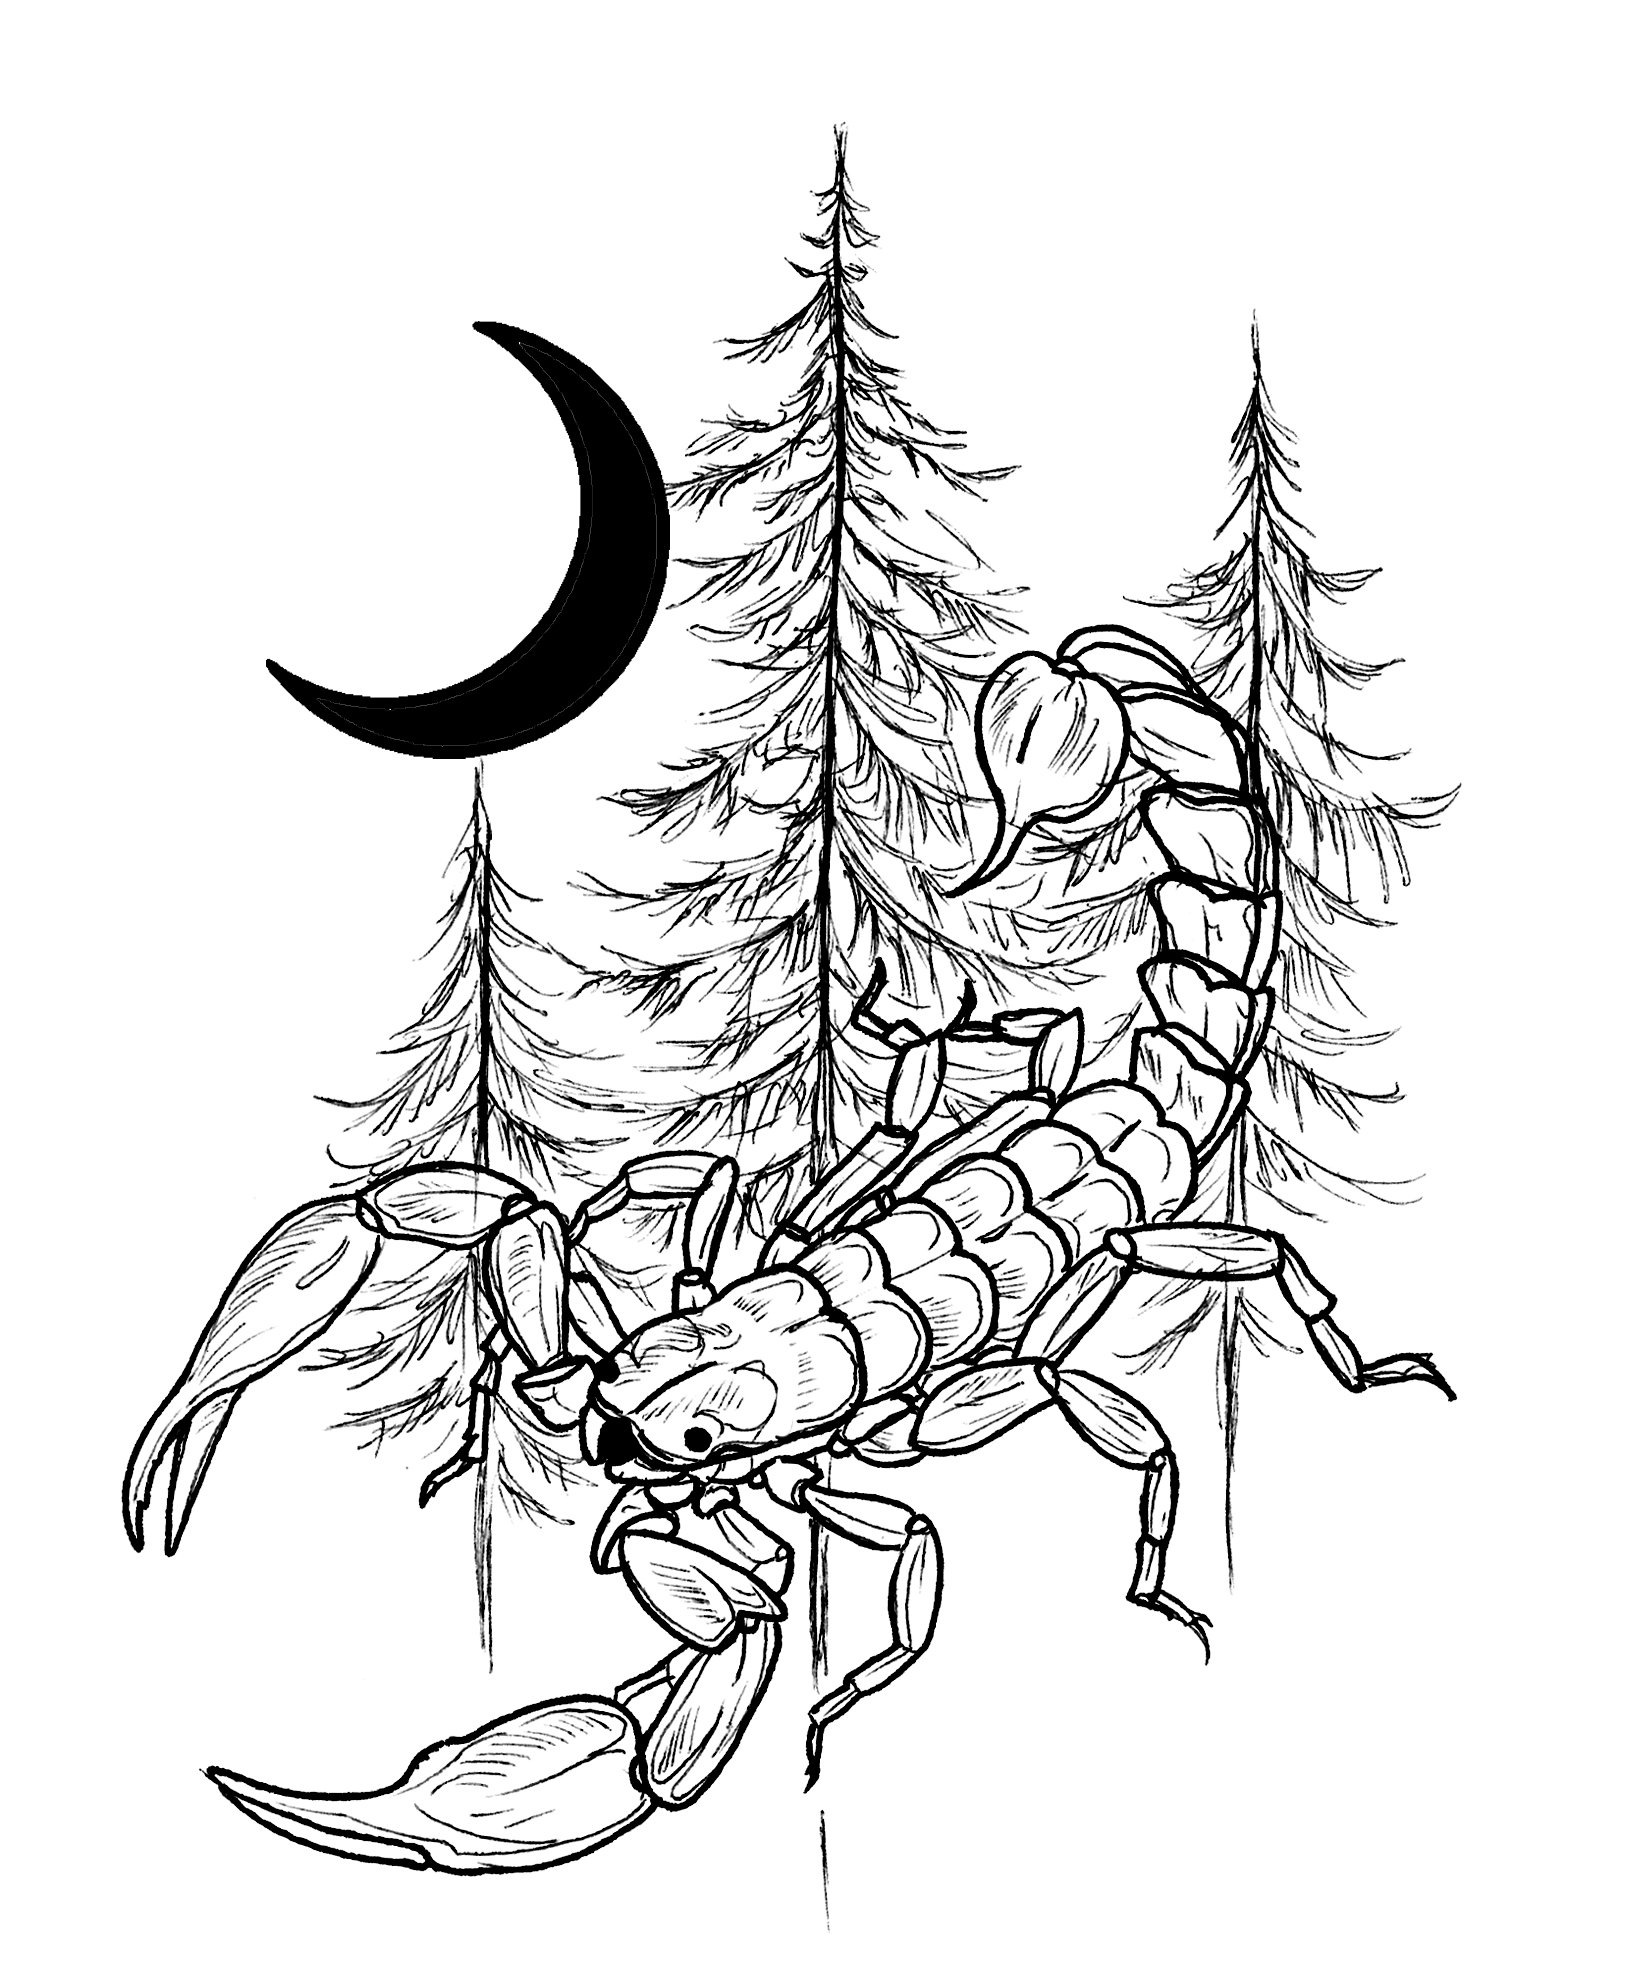 scorpion and trees copy.jpg